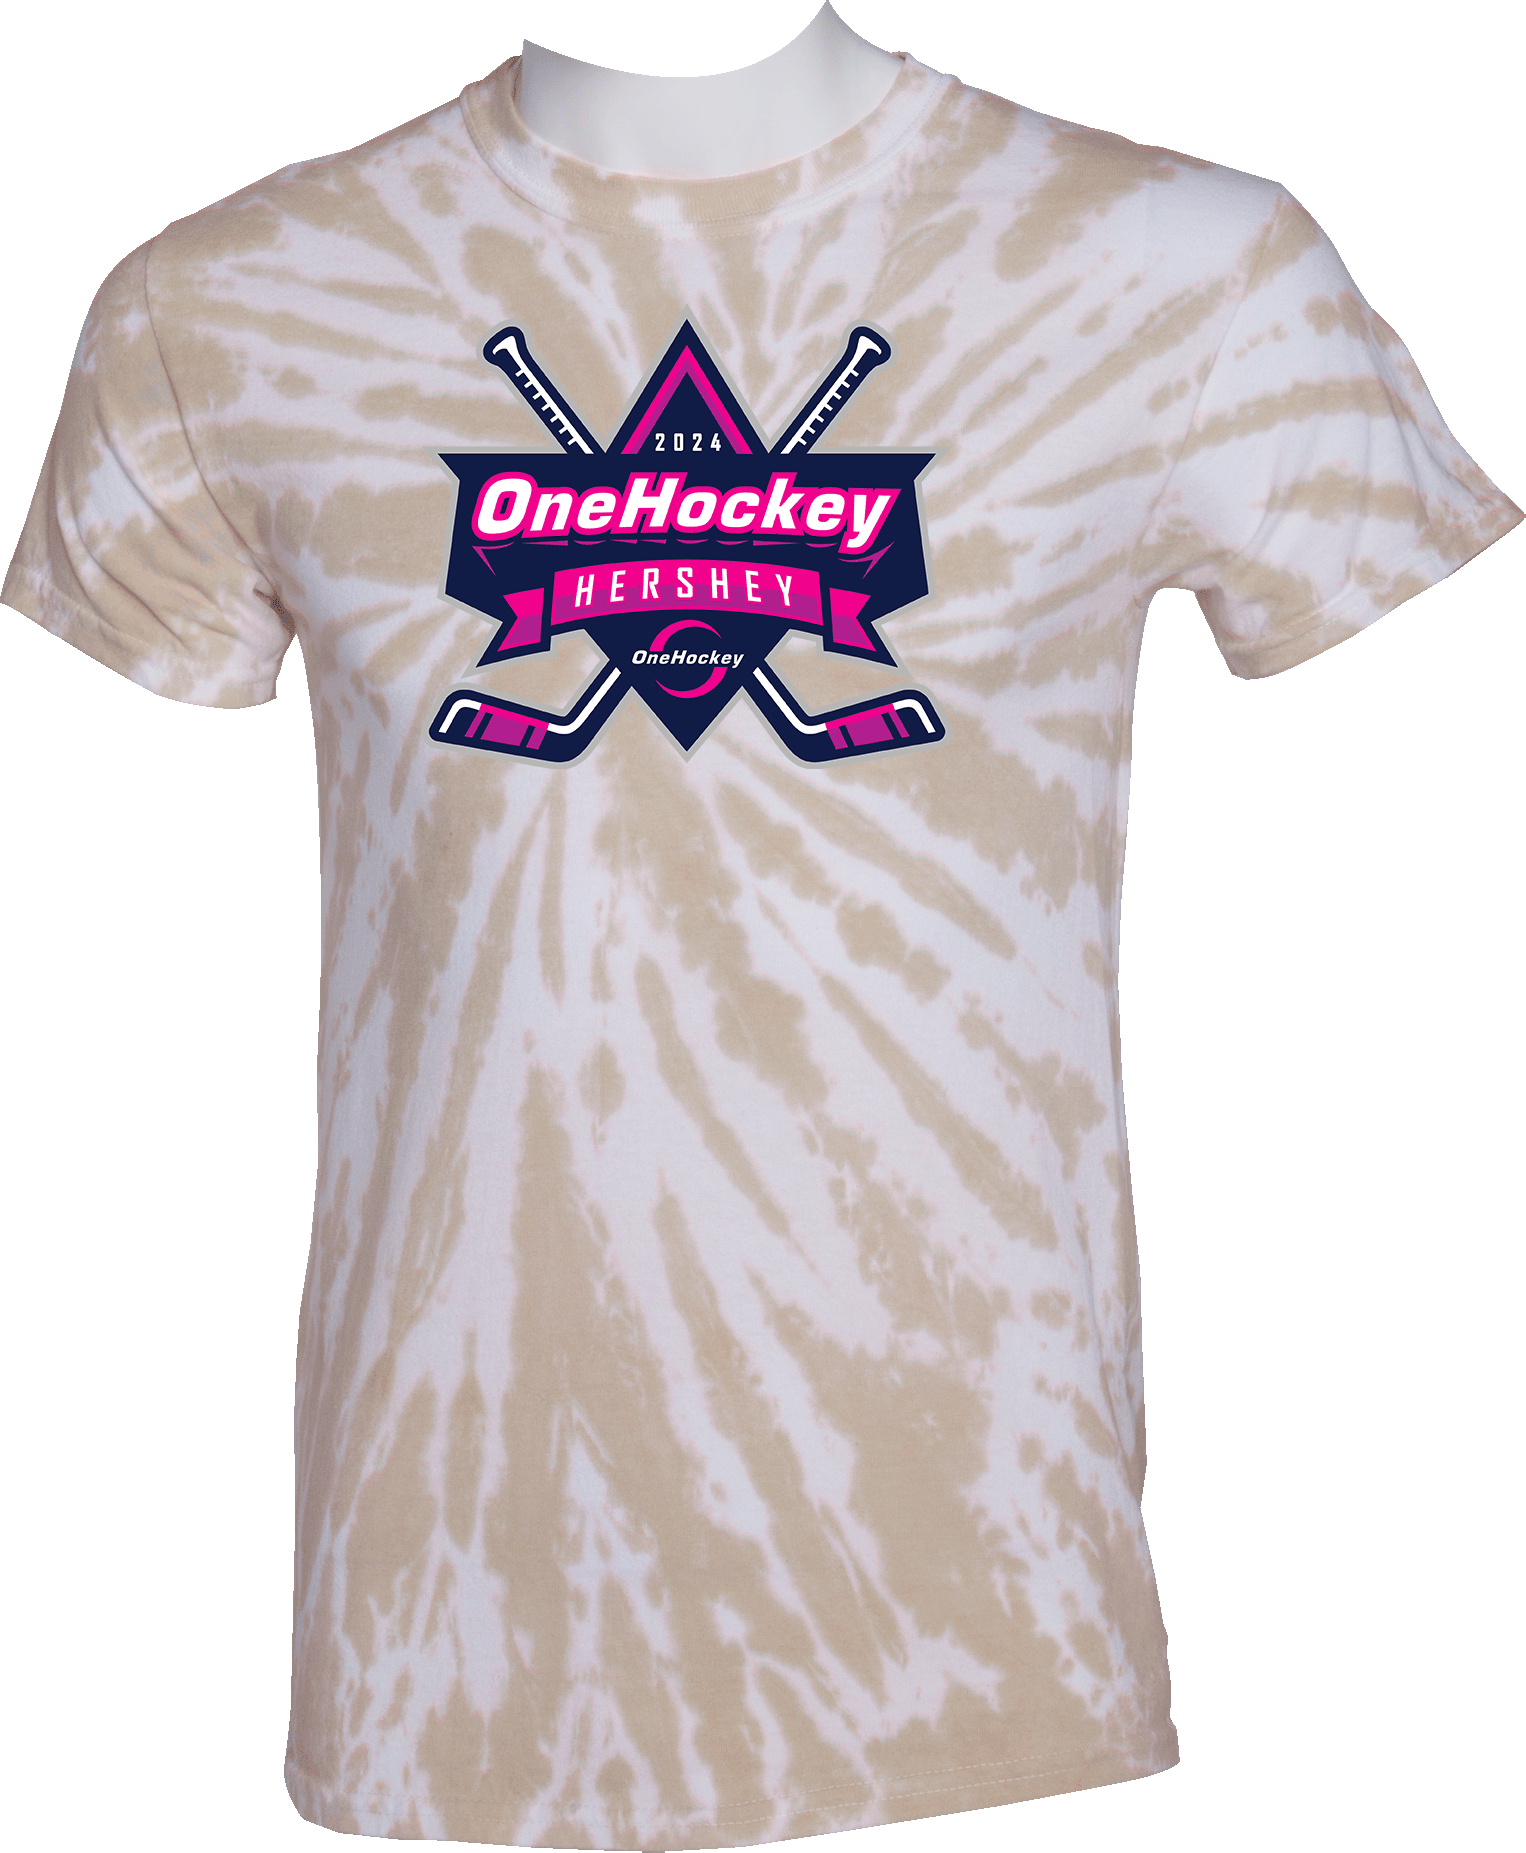 Tie-Dye Short Sleeves - 2024 OneHockey HERSHEY GIRLS June